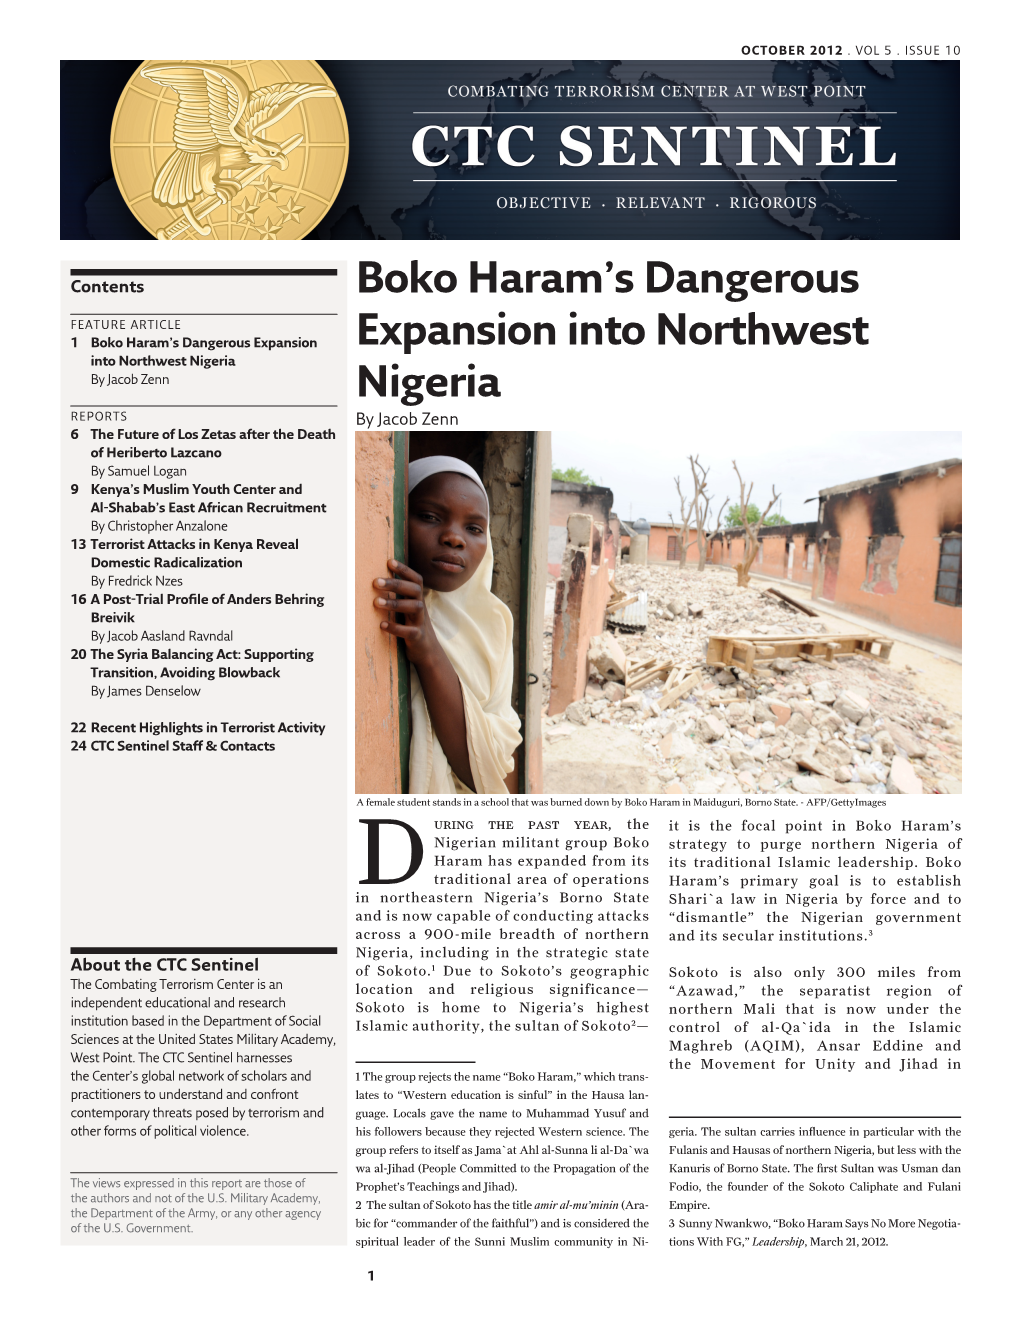 Boko Haram's Dangerous Expansion Into Northwest Nigeria